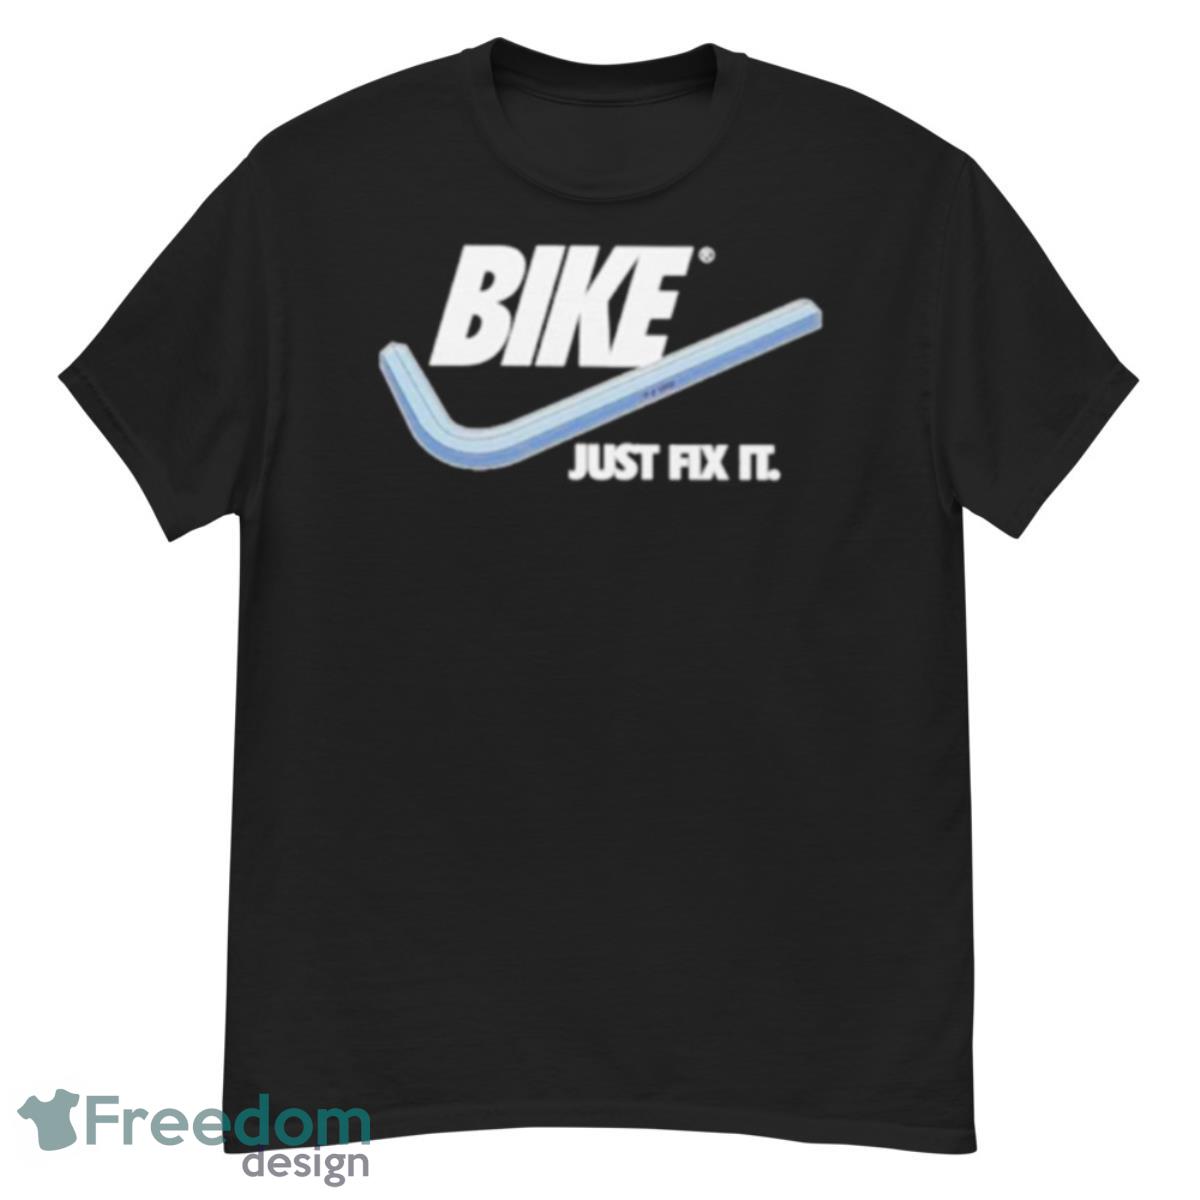 Bike just fix it shirt - G500 Men’s Classic T-Shirt